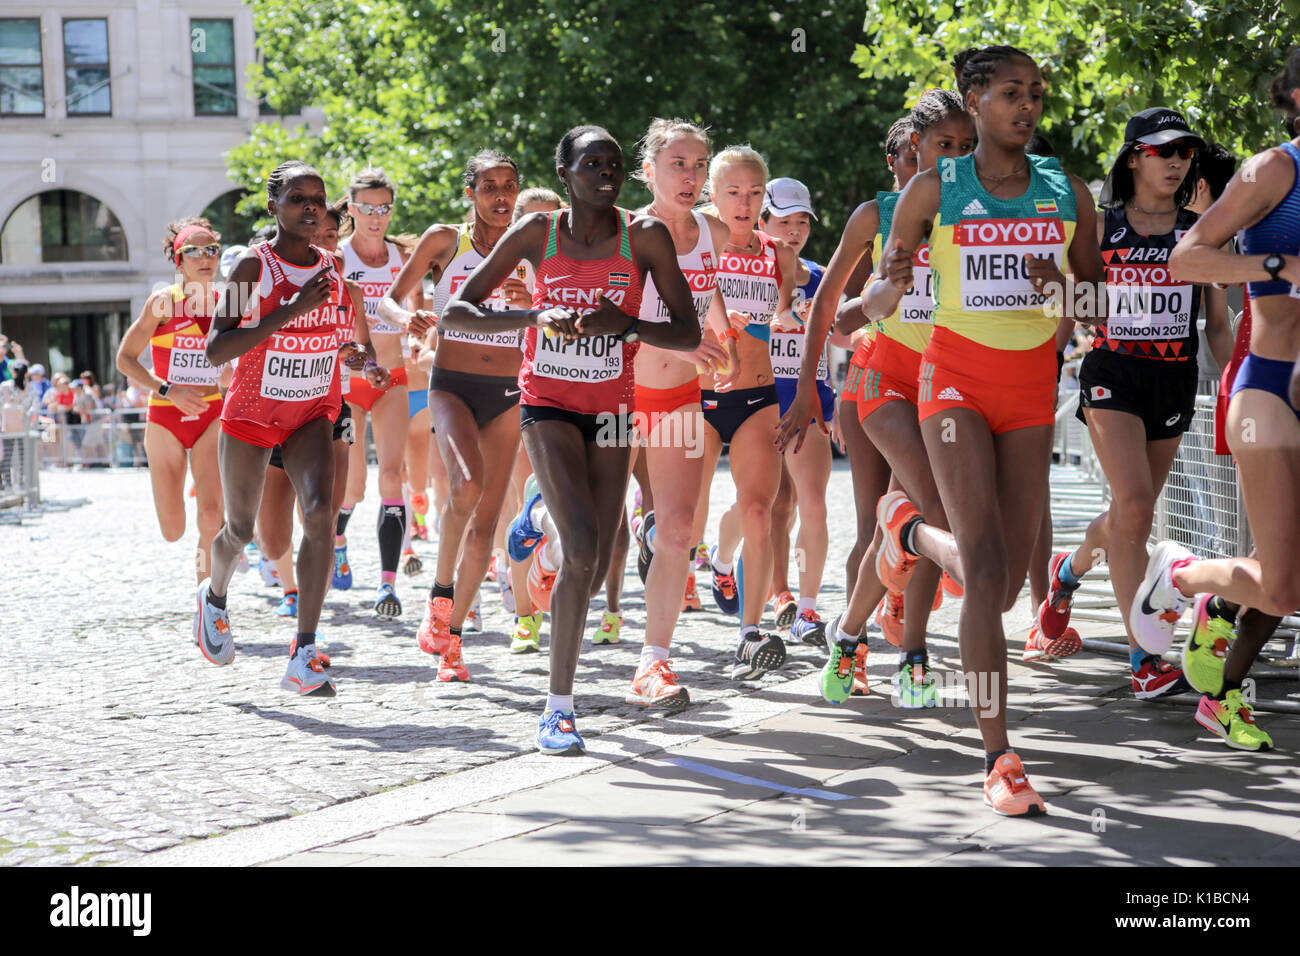 2017/8/6 London: Ethiopian athlete  ASELEFECH MERGIA leads a group of athletes in the IAAF World Championship Marathon Stock Photo